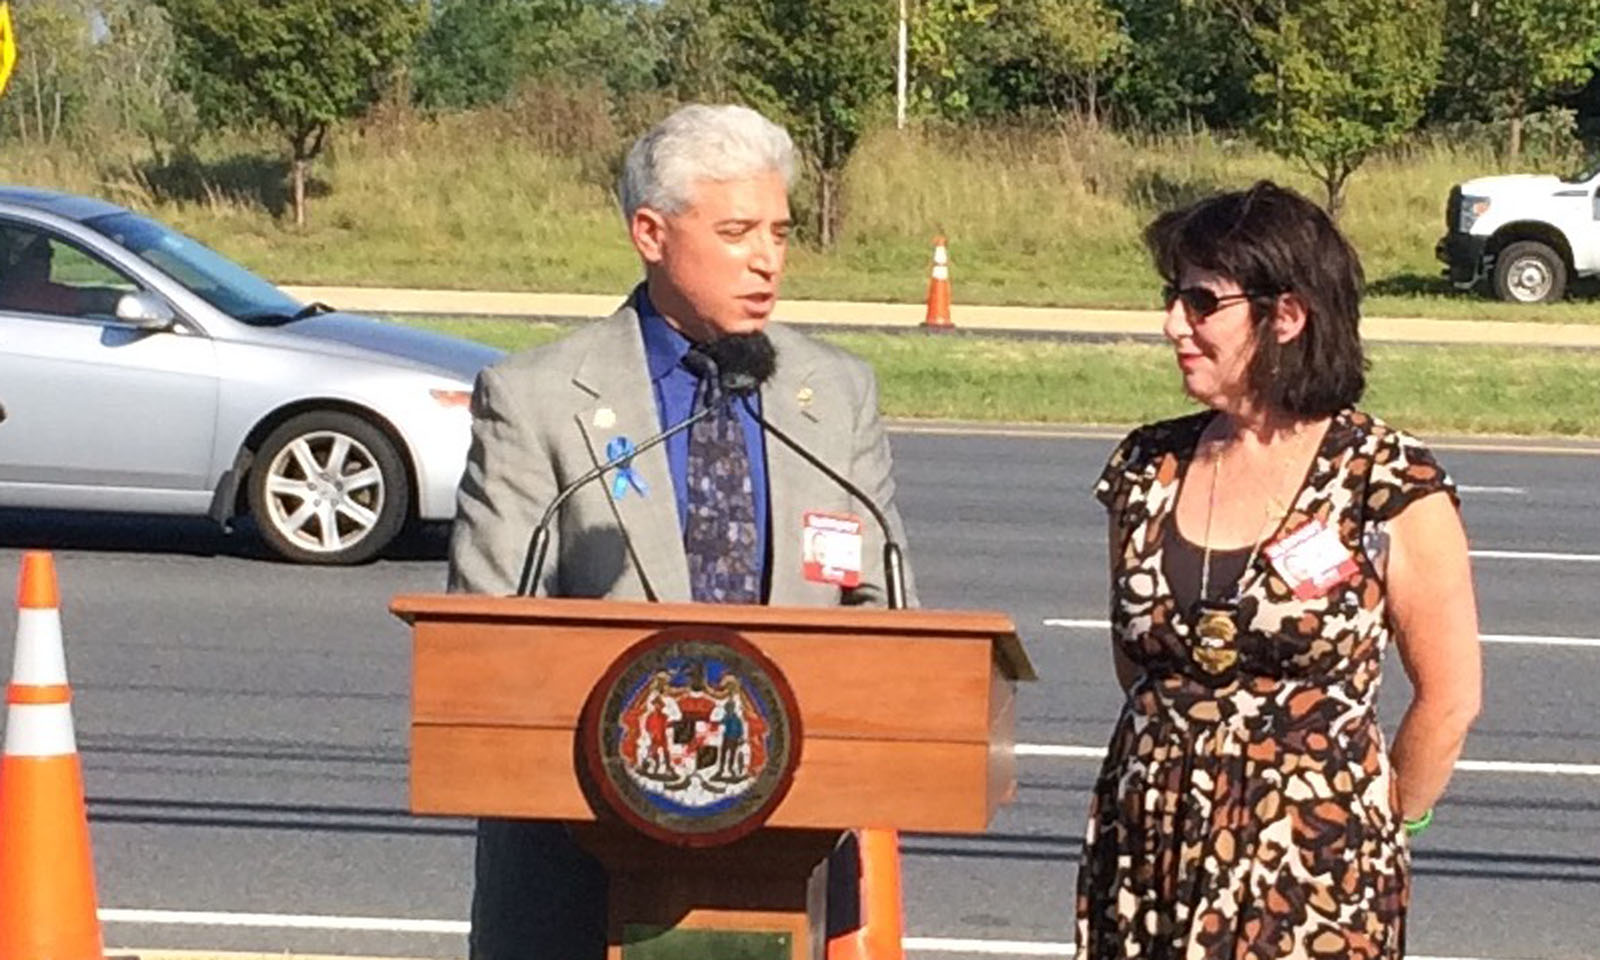 Noah Leotta's parents, Rich Leotta and Marcia Goldman, were at the dedication. (WTOP/Dick Uliano)